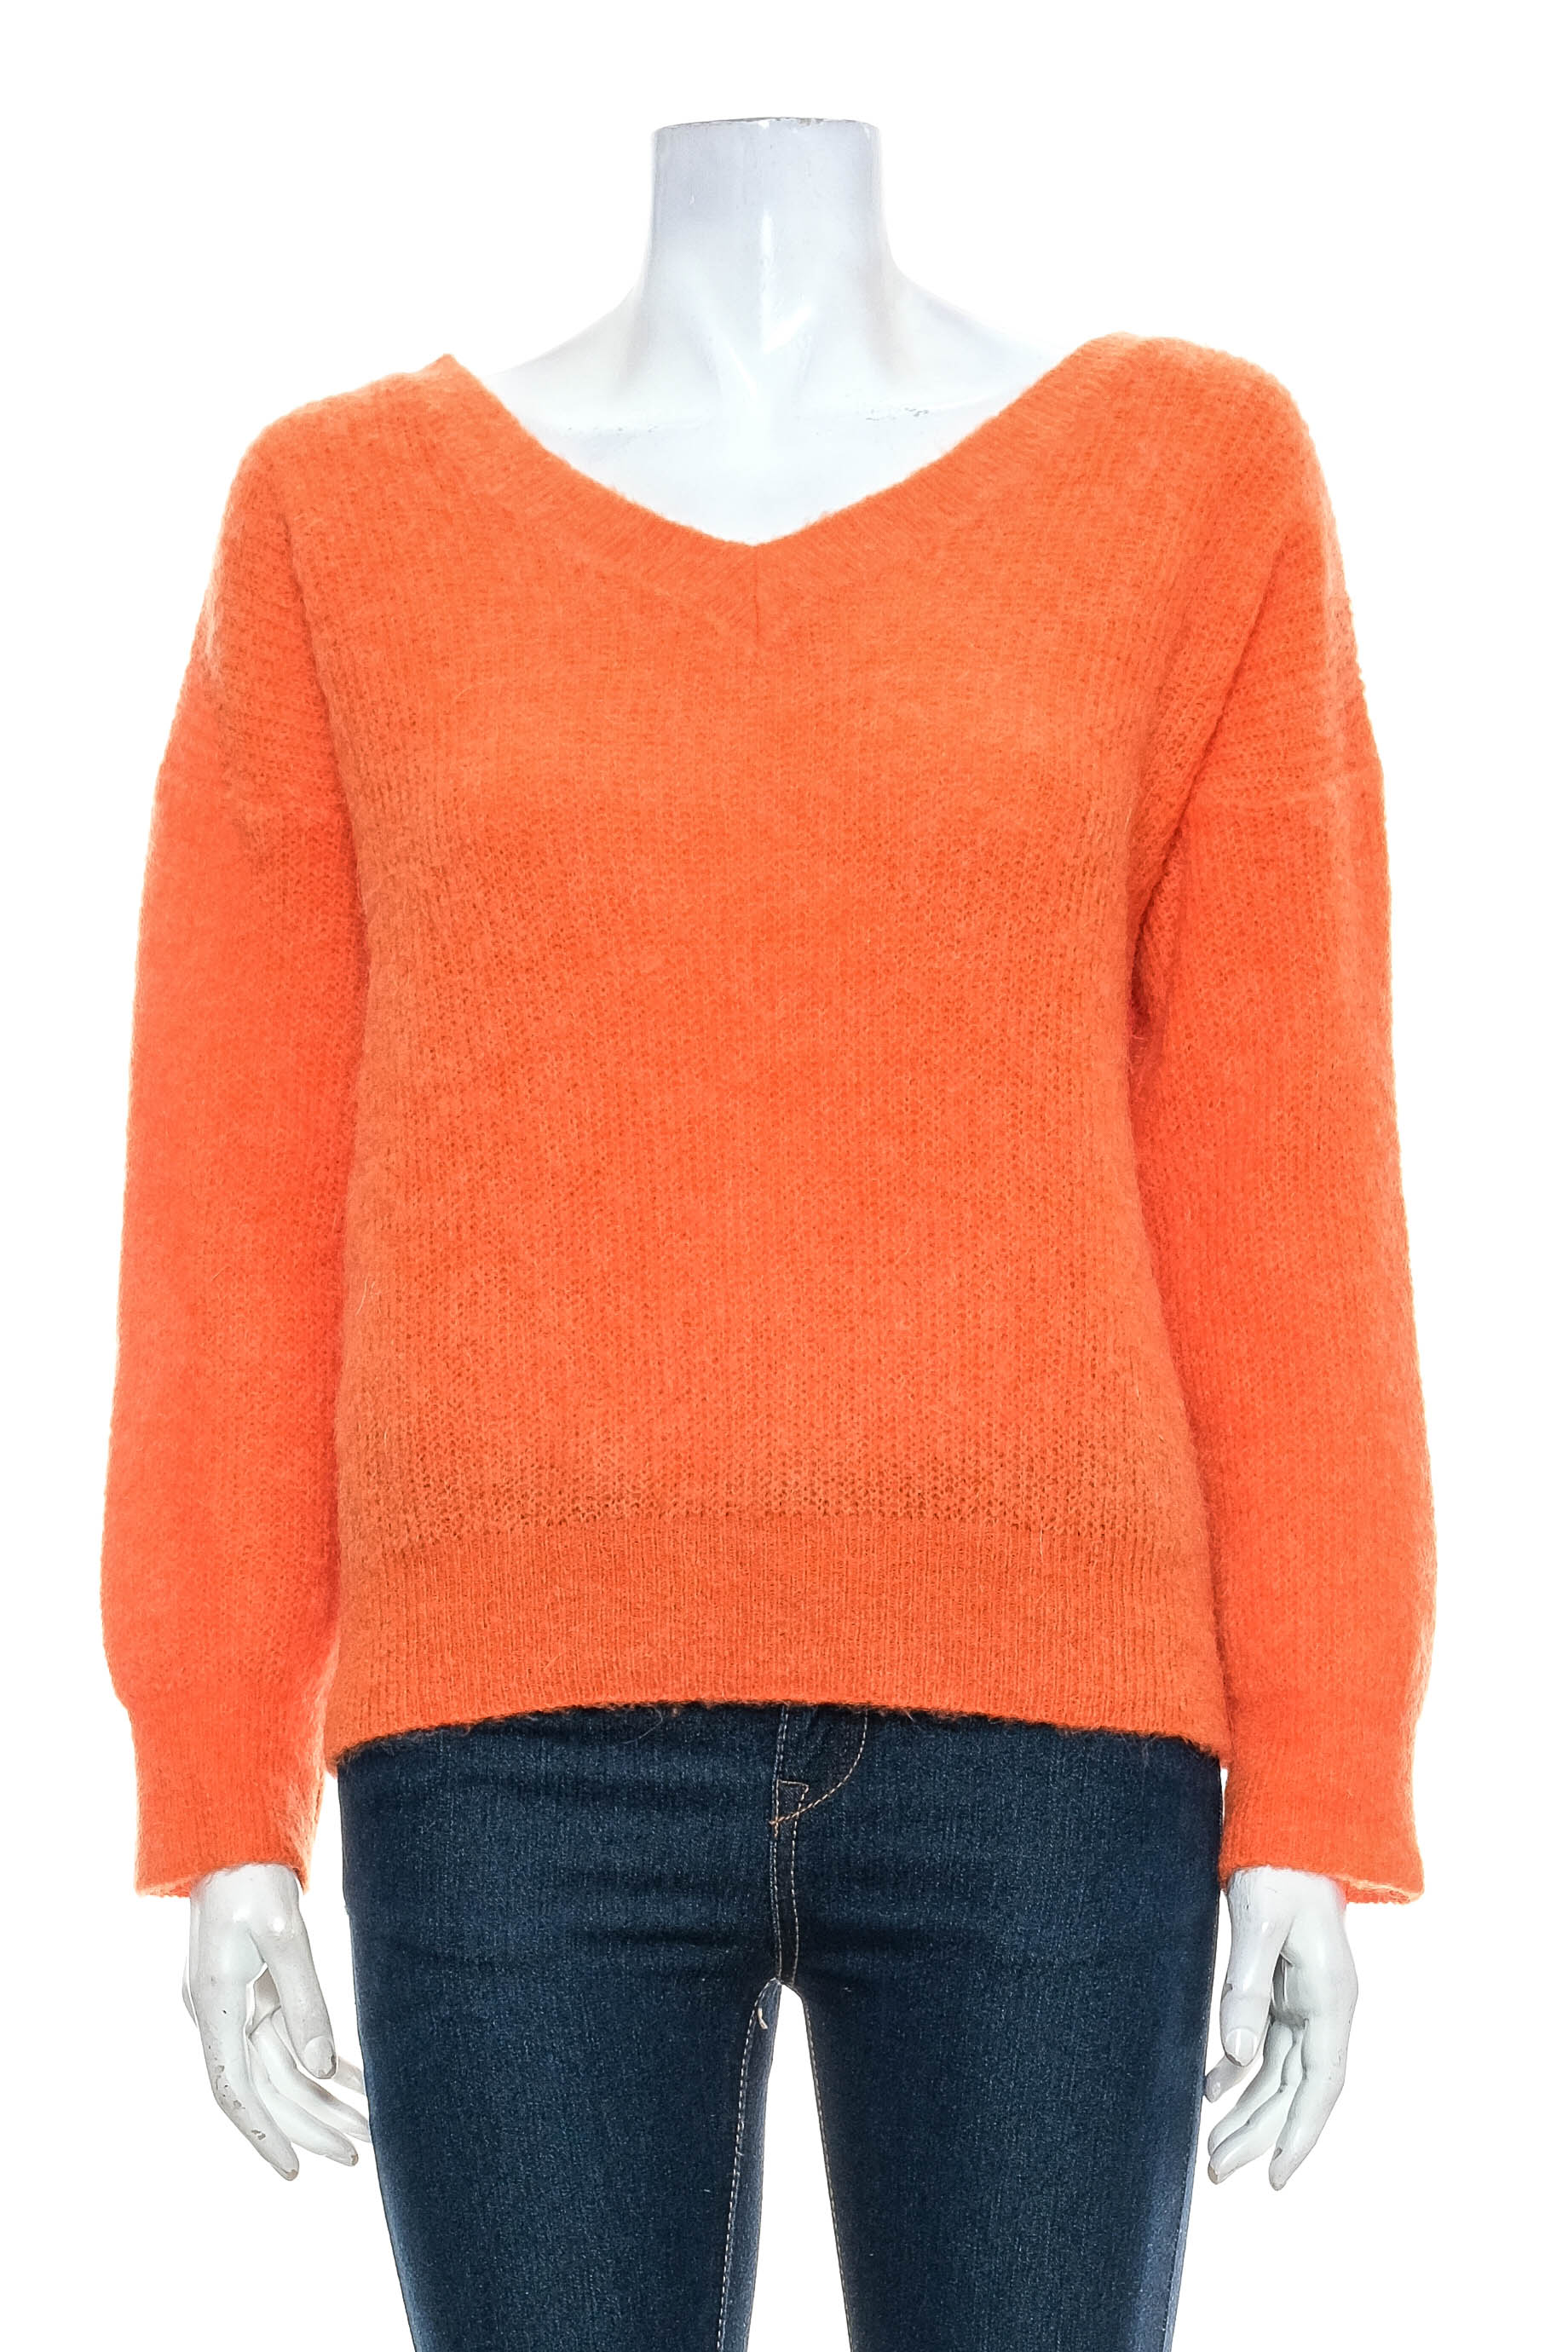 Women's sweater - TERRA DI SIENA - 0